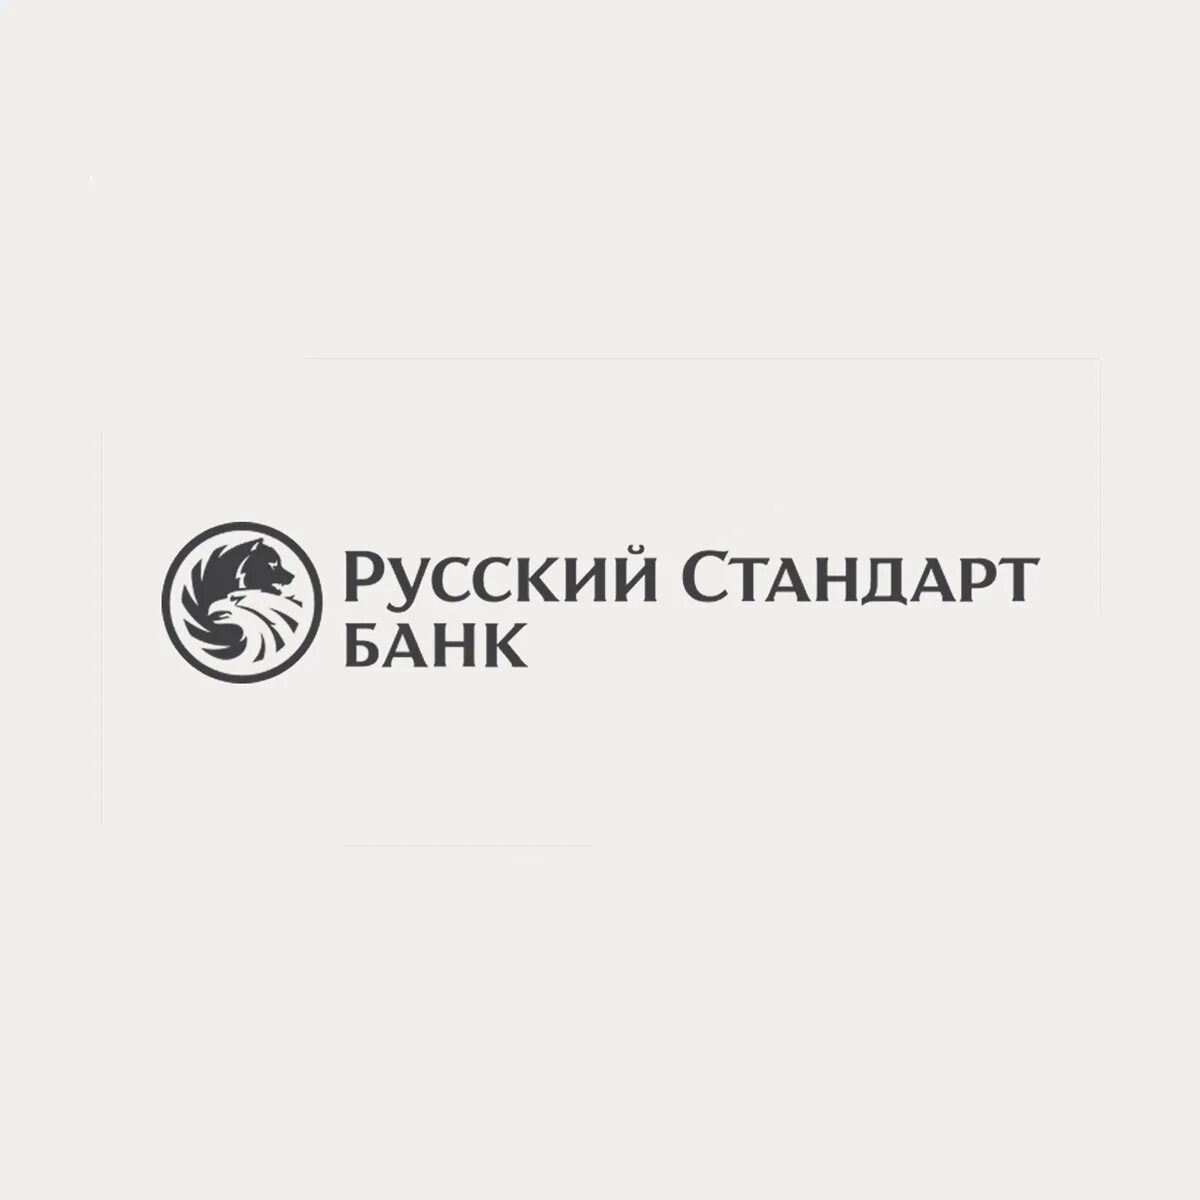 Rus standart xyz. Русский стандарт банк. Русский стандарт лого. Значок банк русский стандарт.